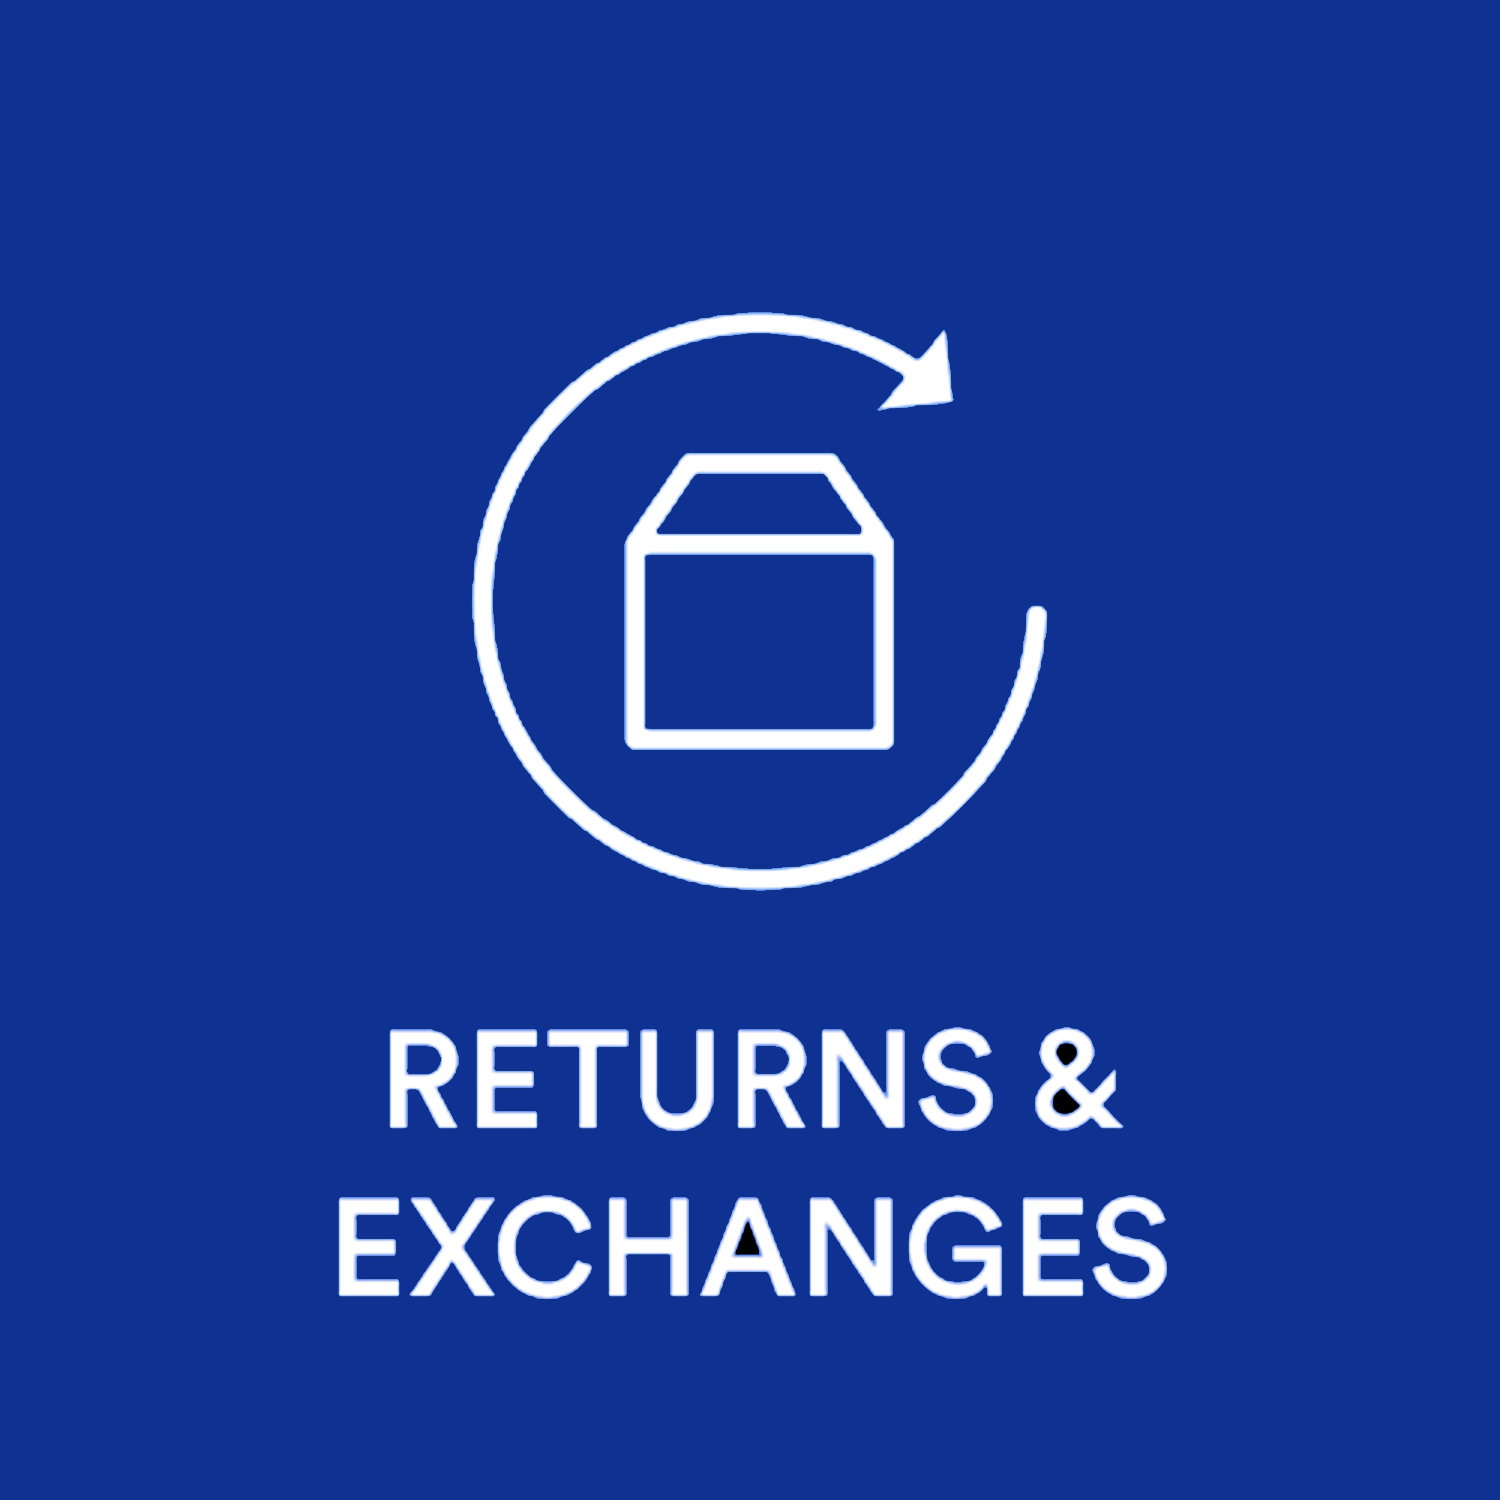 Return & Exchanges